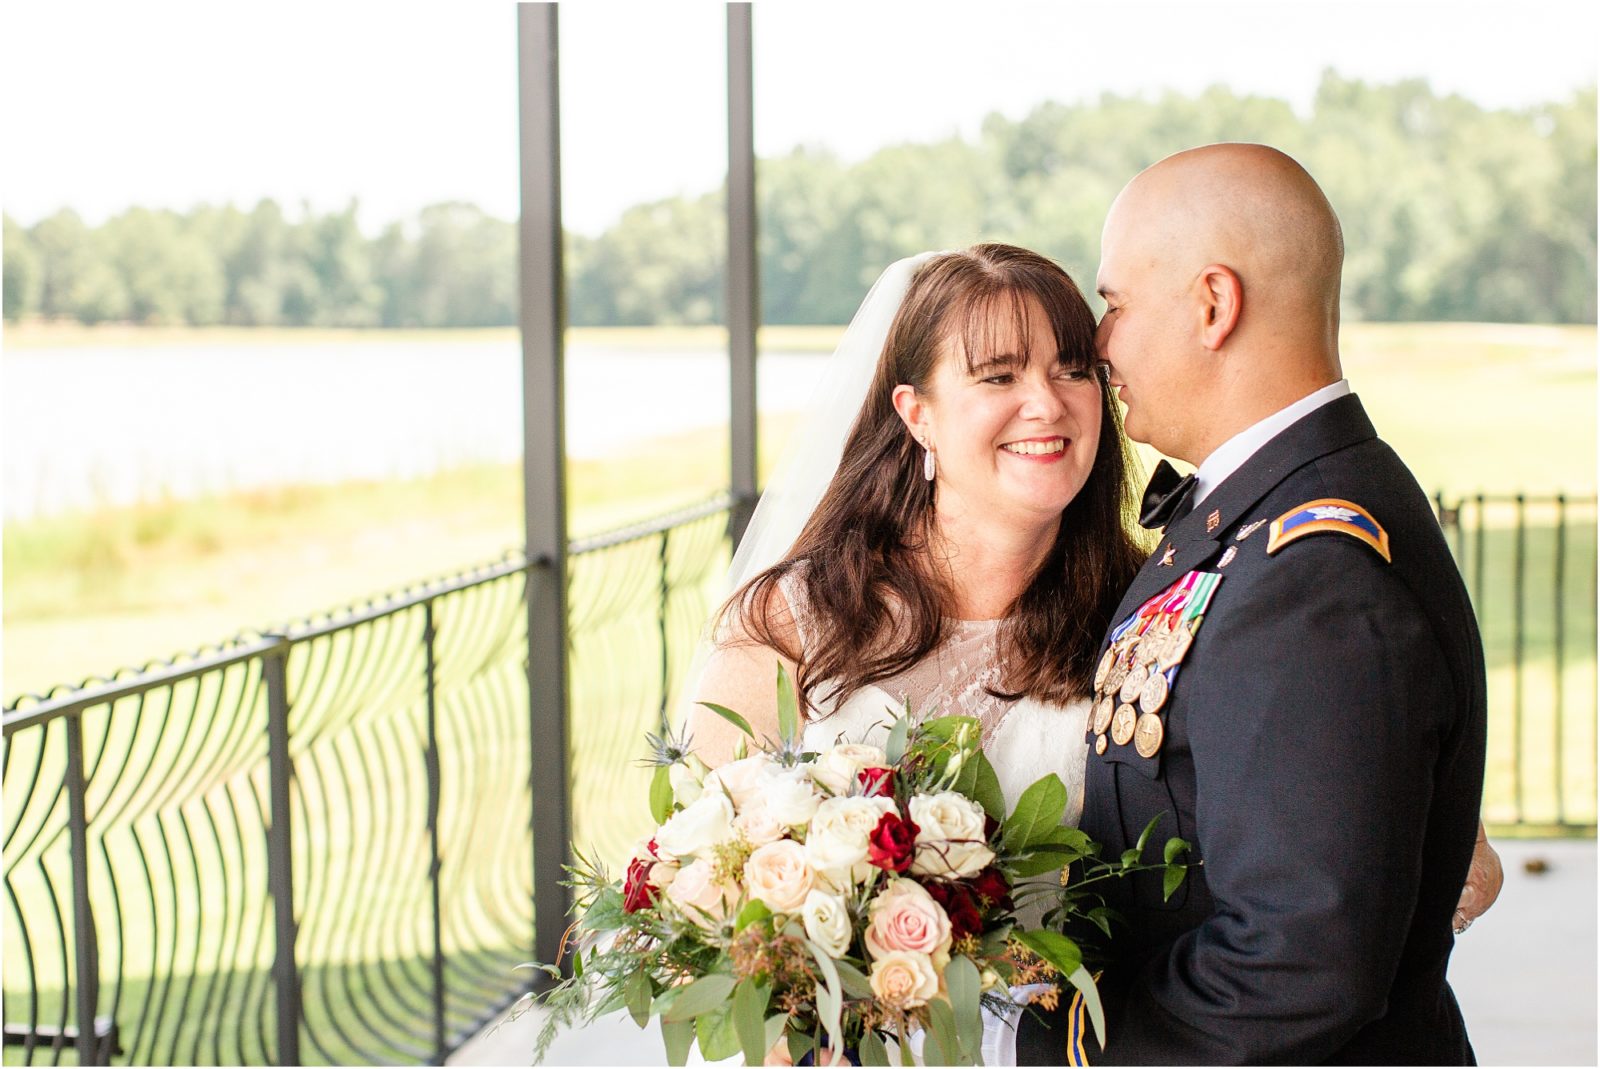 Military groom kissing bride